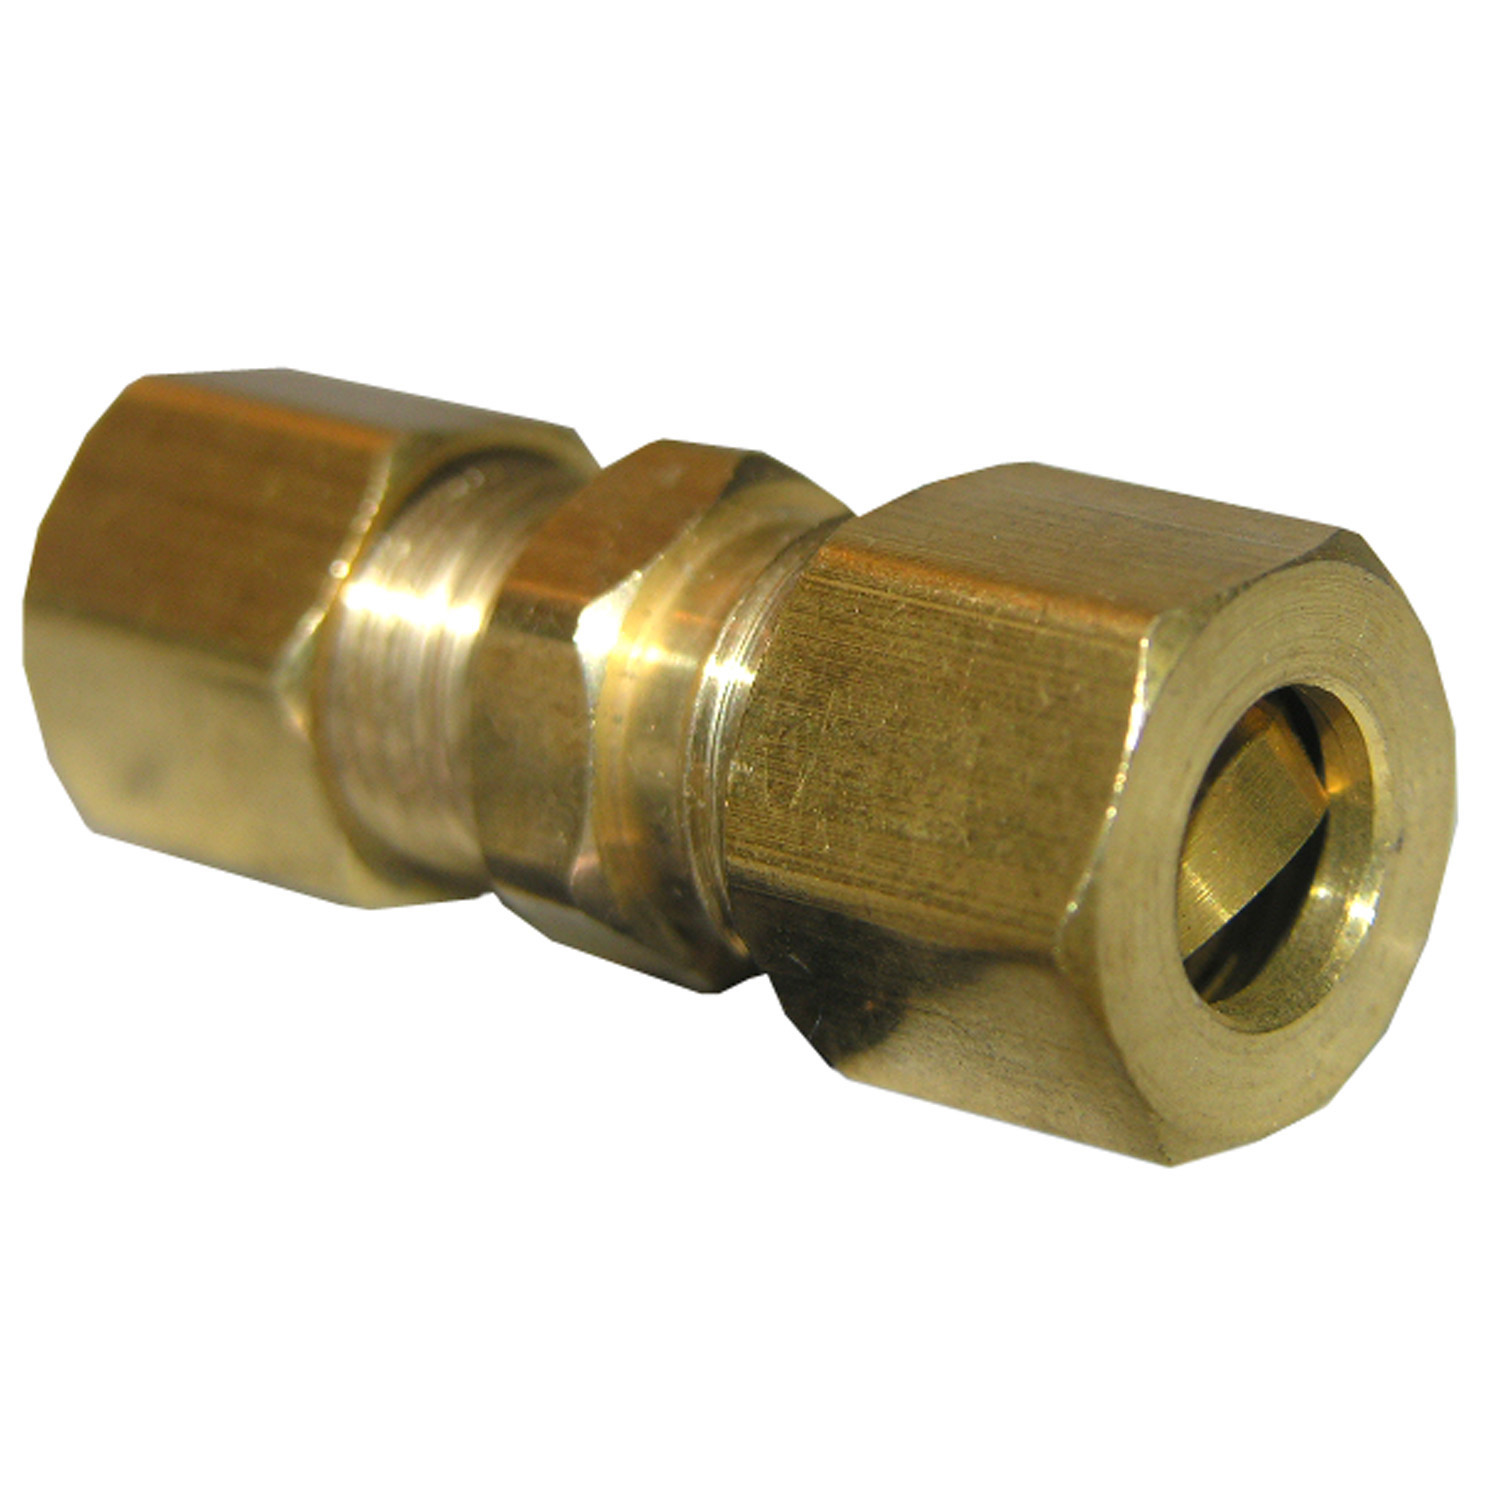 17-6205 Reducing Pipe Union, 1/4 x 3/16 in, Compression, Brass, 100 psi Pressure